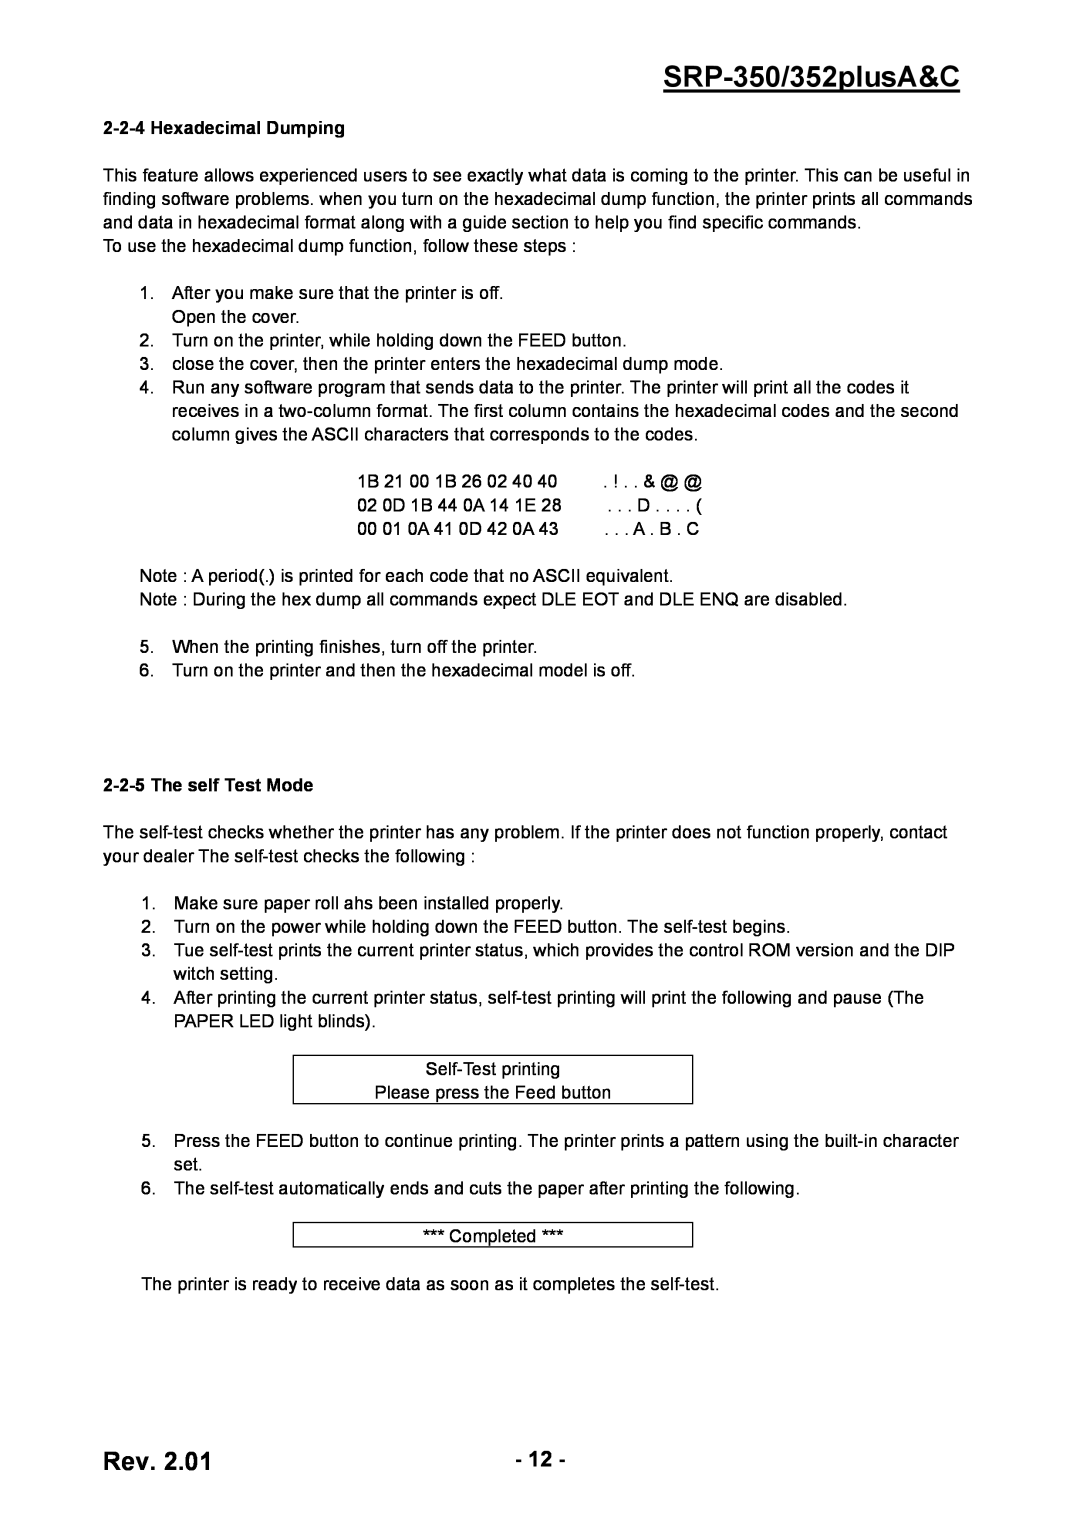 BIXOLON service manual SRP-350/352plusA&C, Hexadecimal Dumping, The self Test Mode 